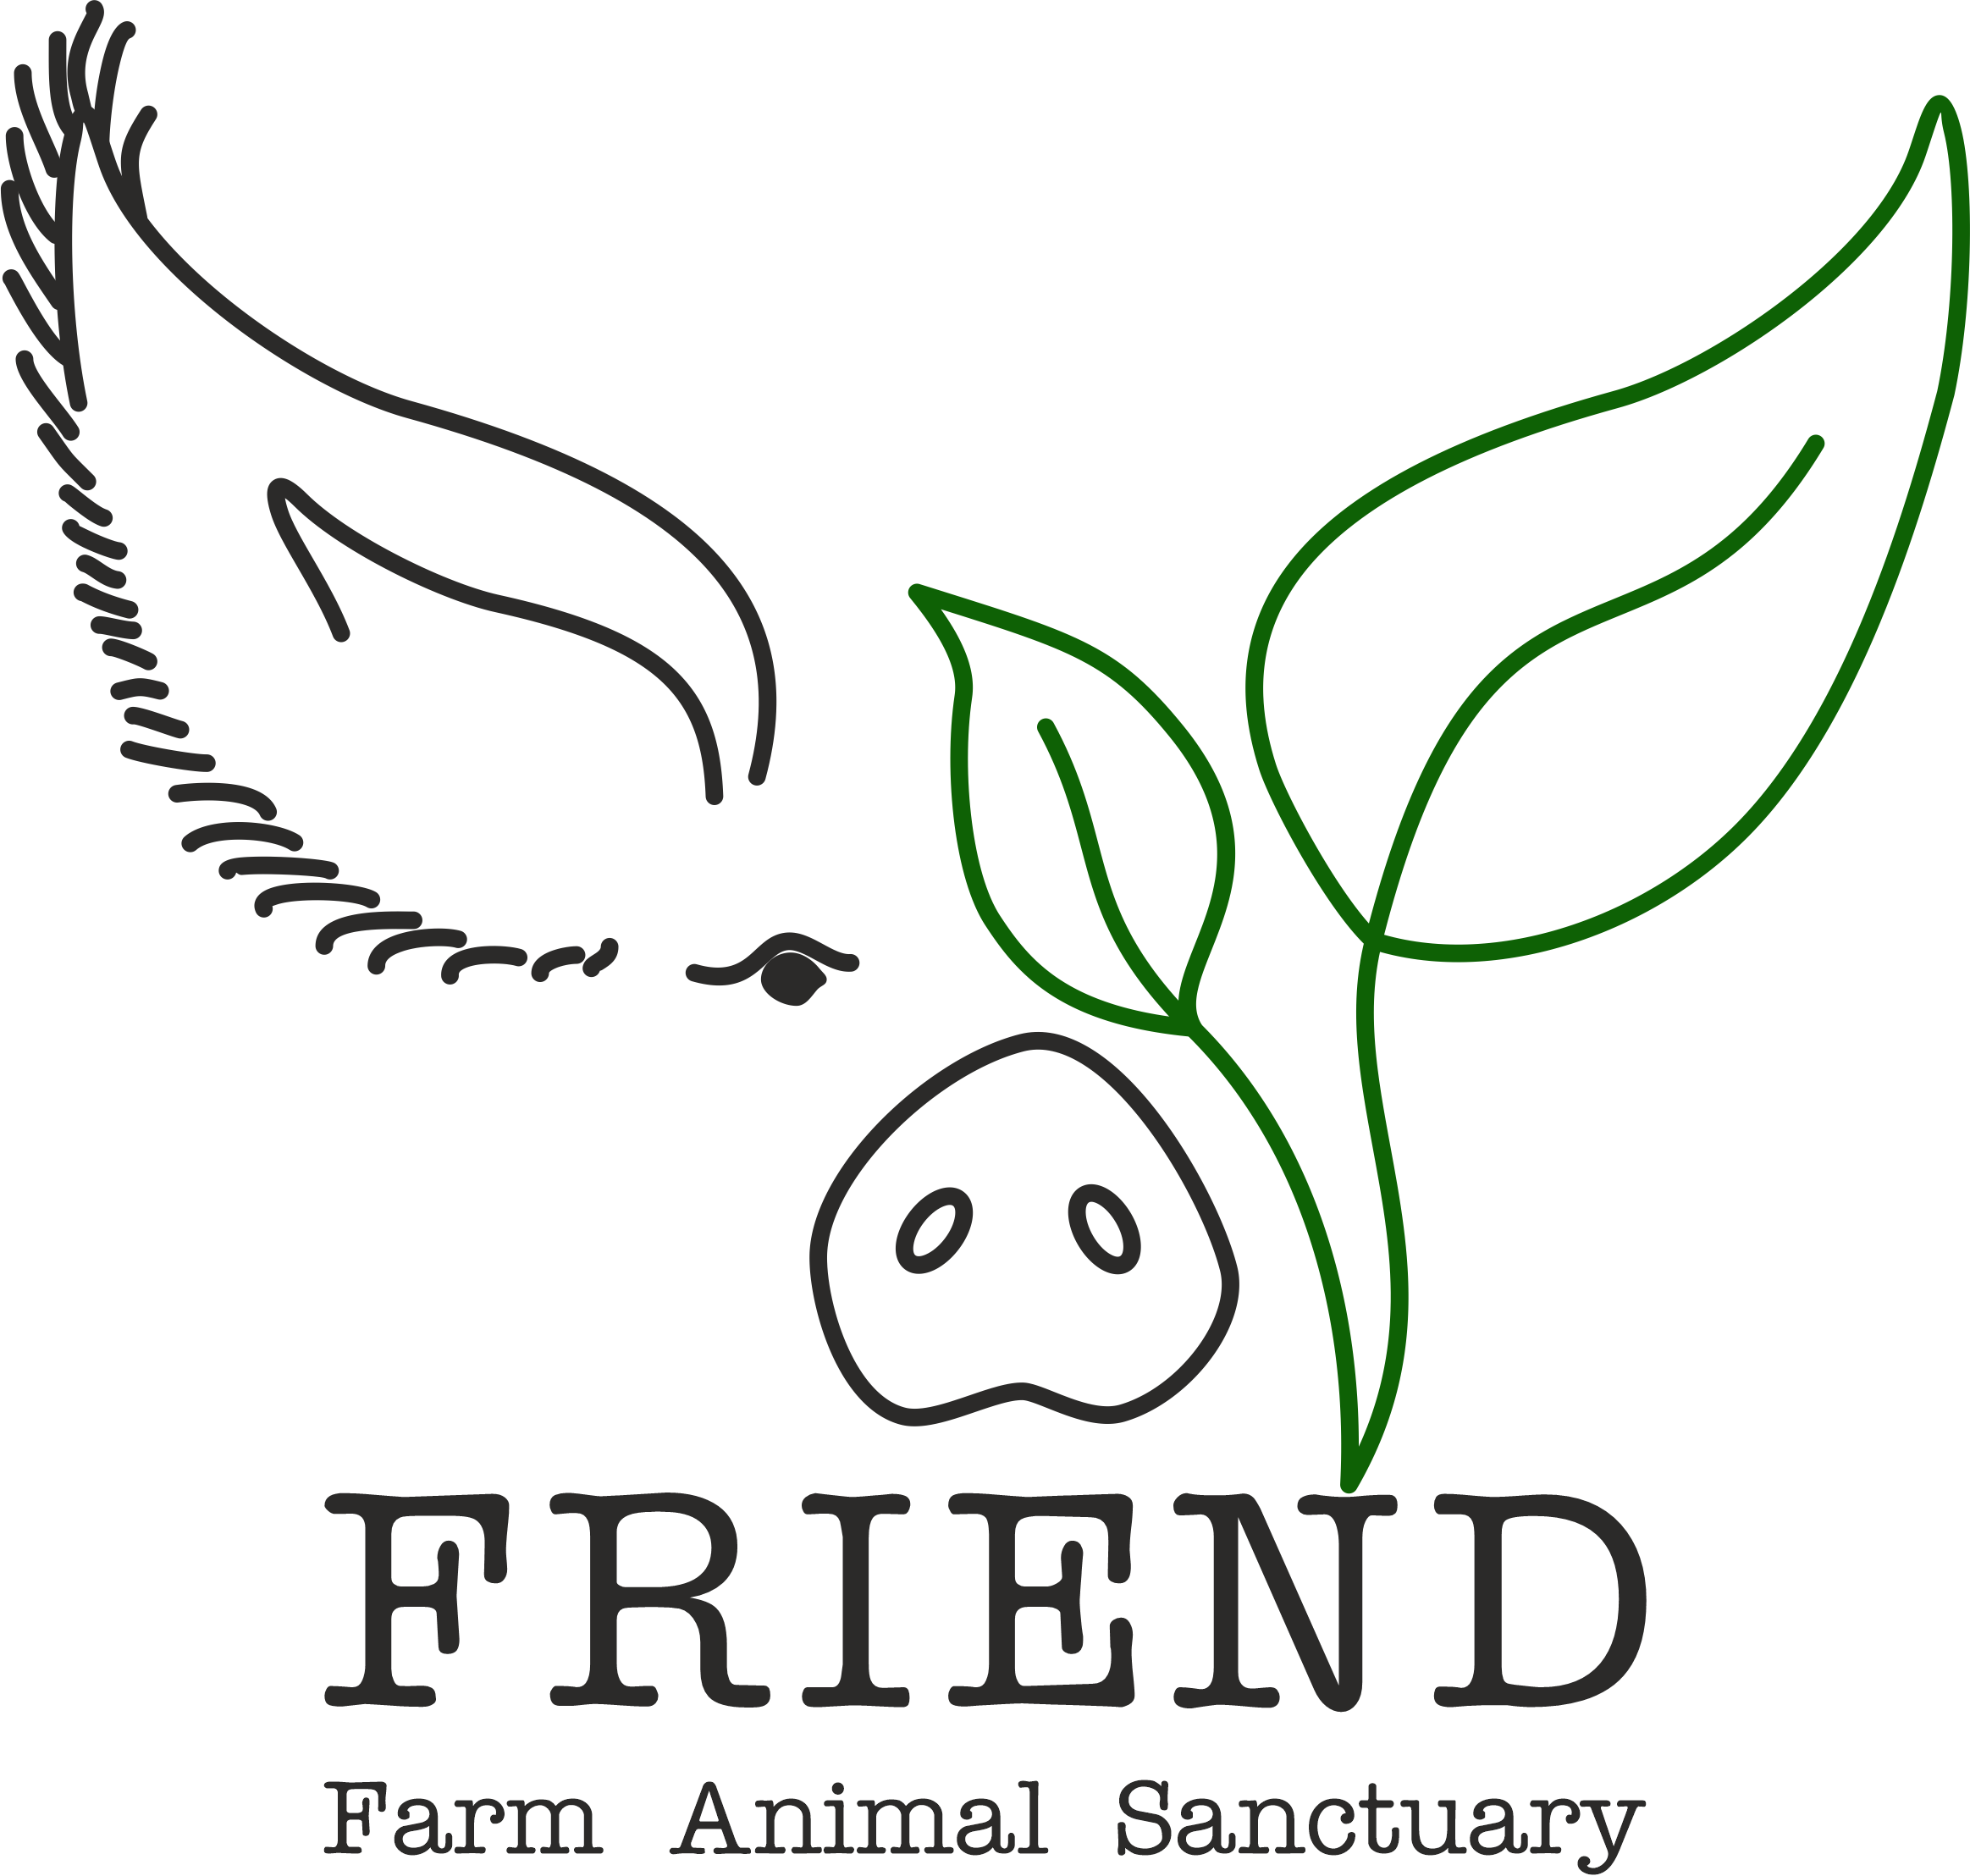 Friend Farm Animal Sanctuary